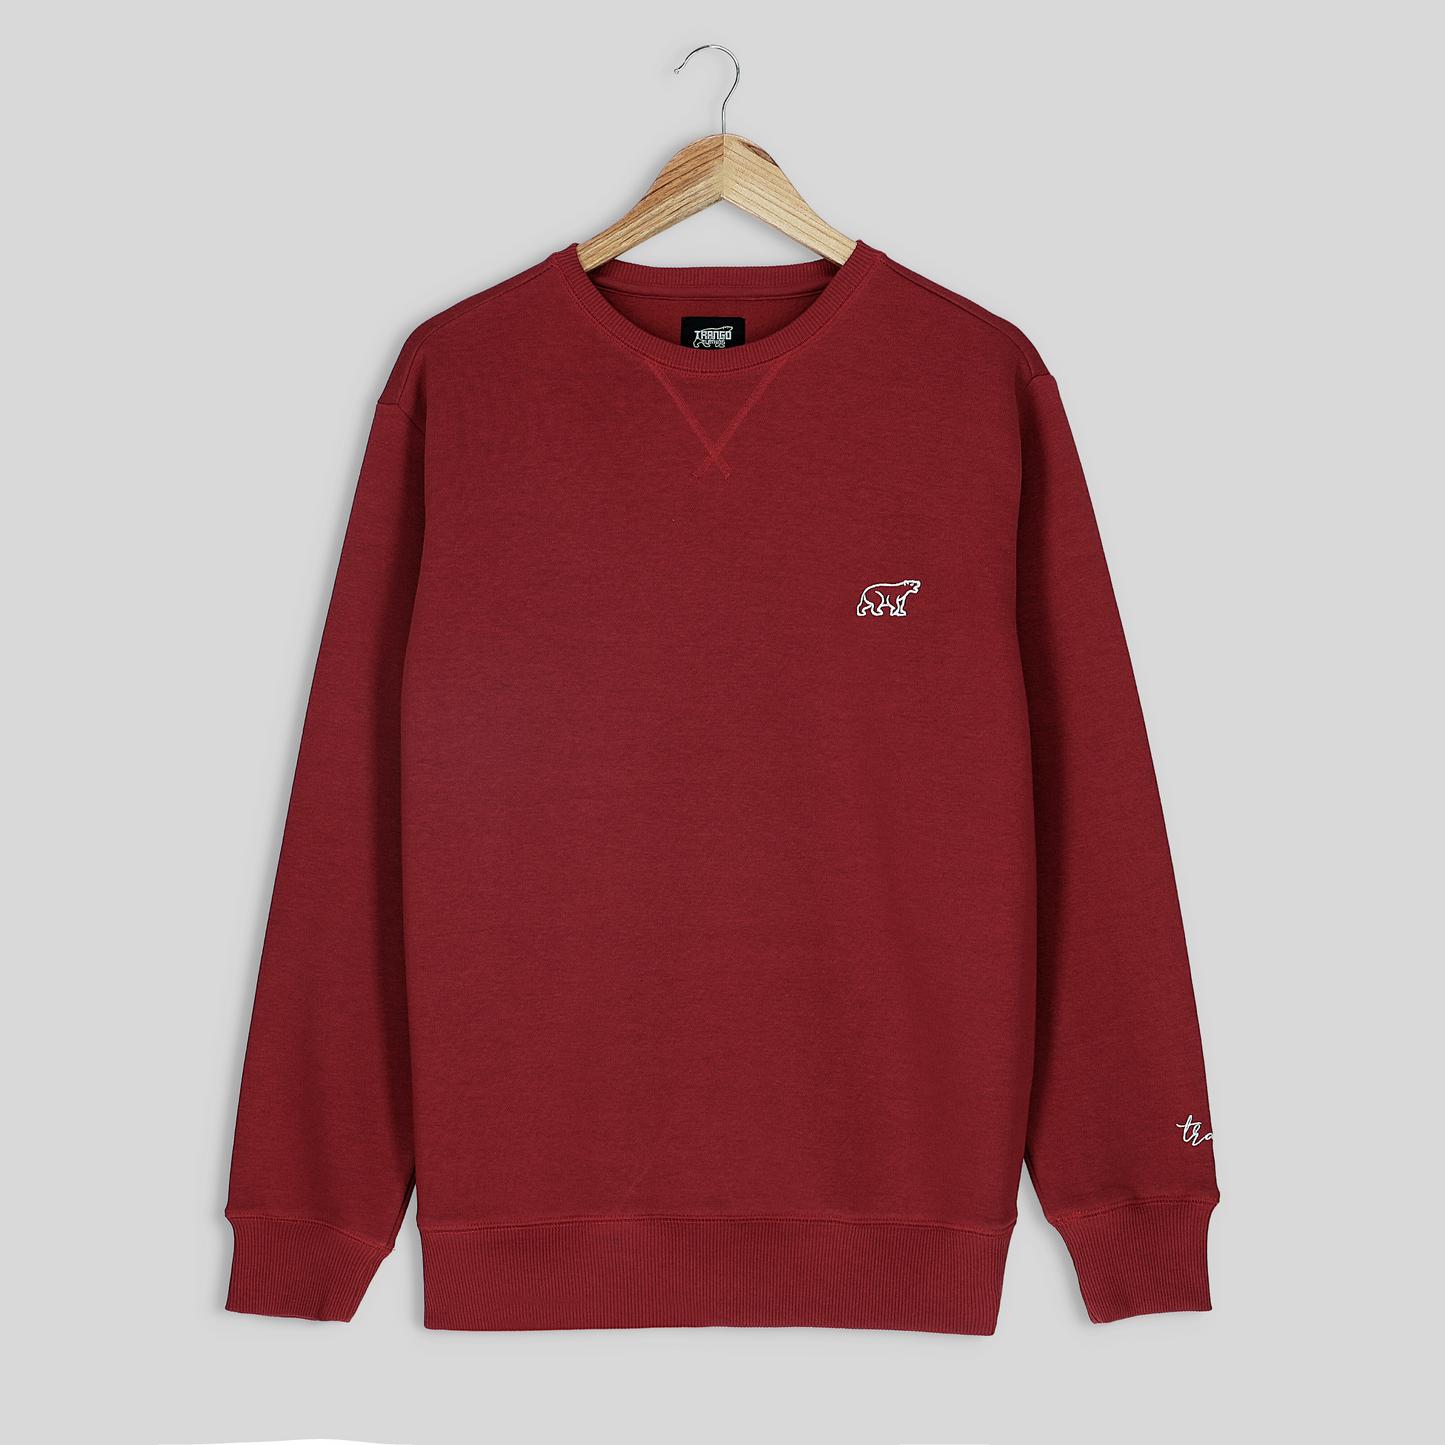 Polarbear Sweatshirt - Red